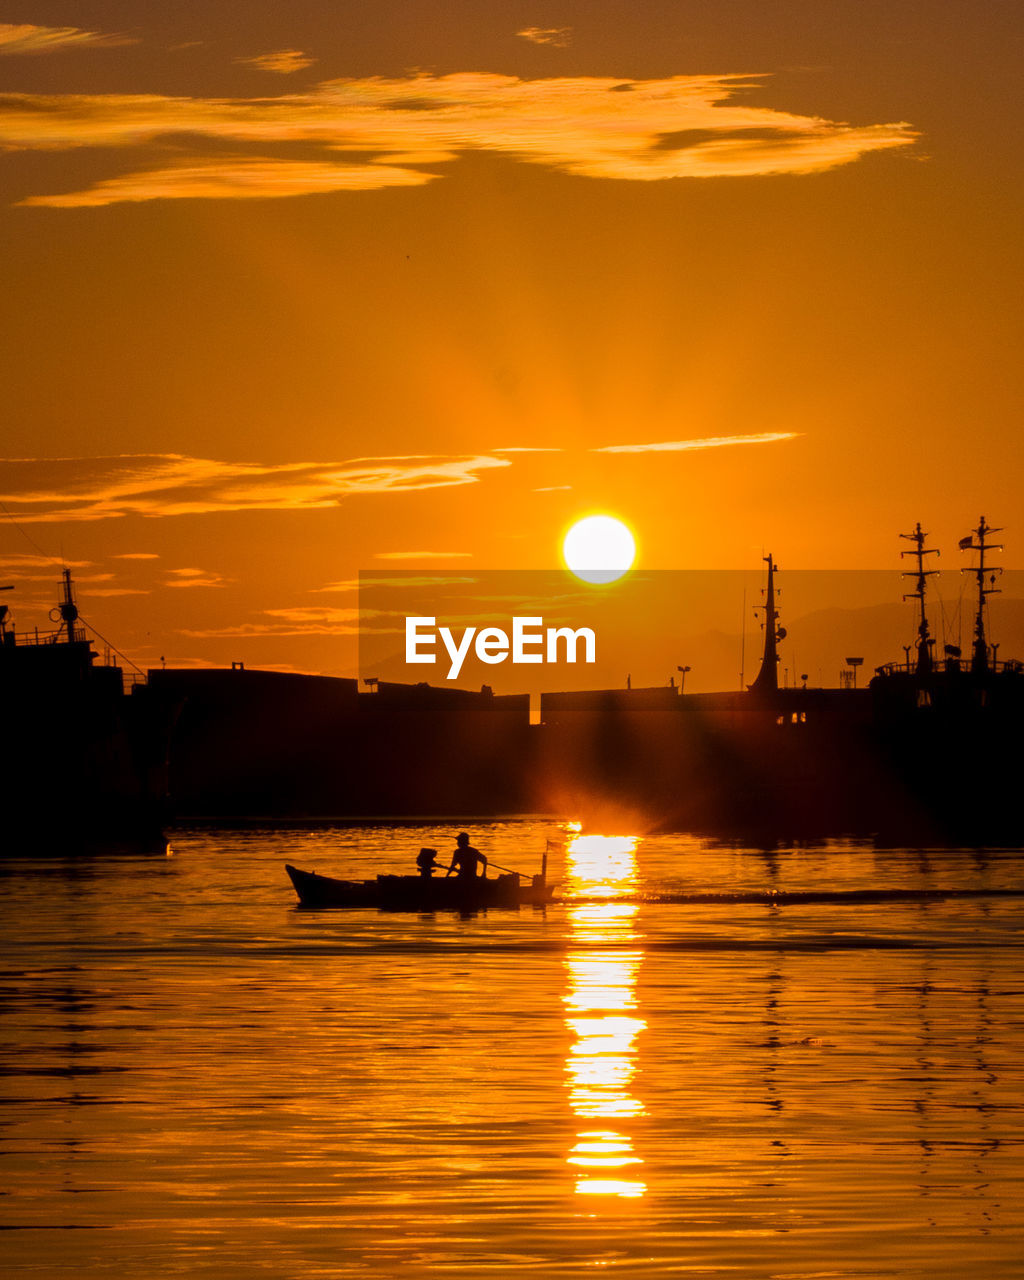 Silhouette boats in sea against orange sky